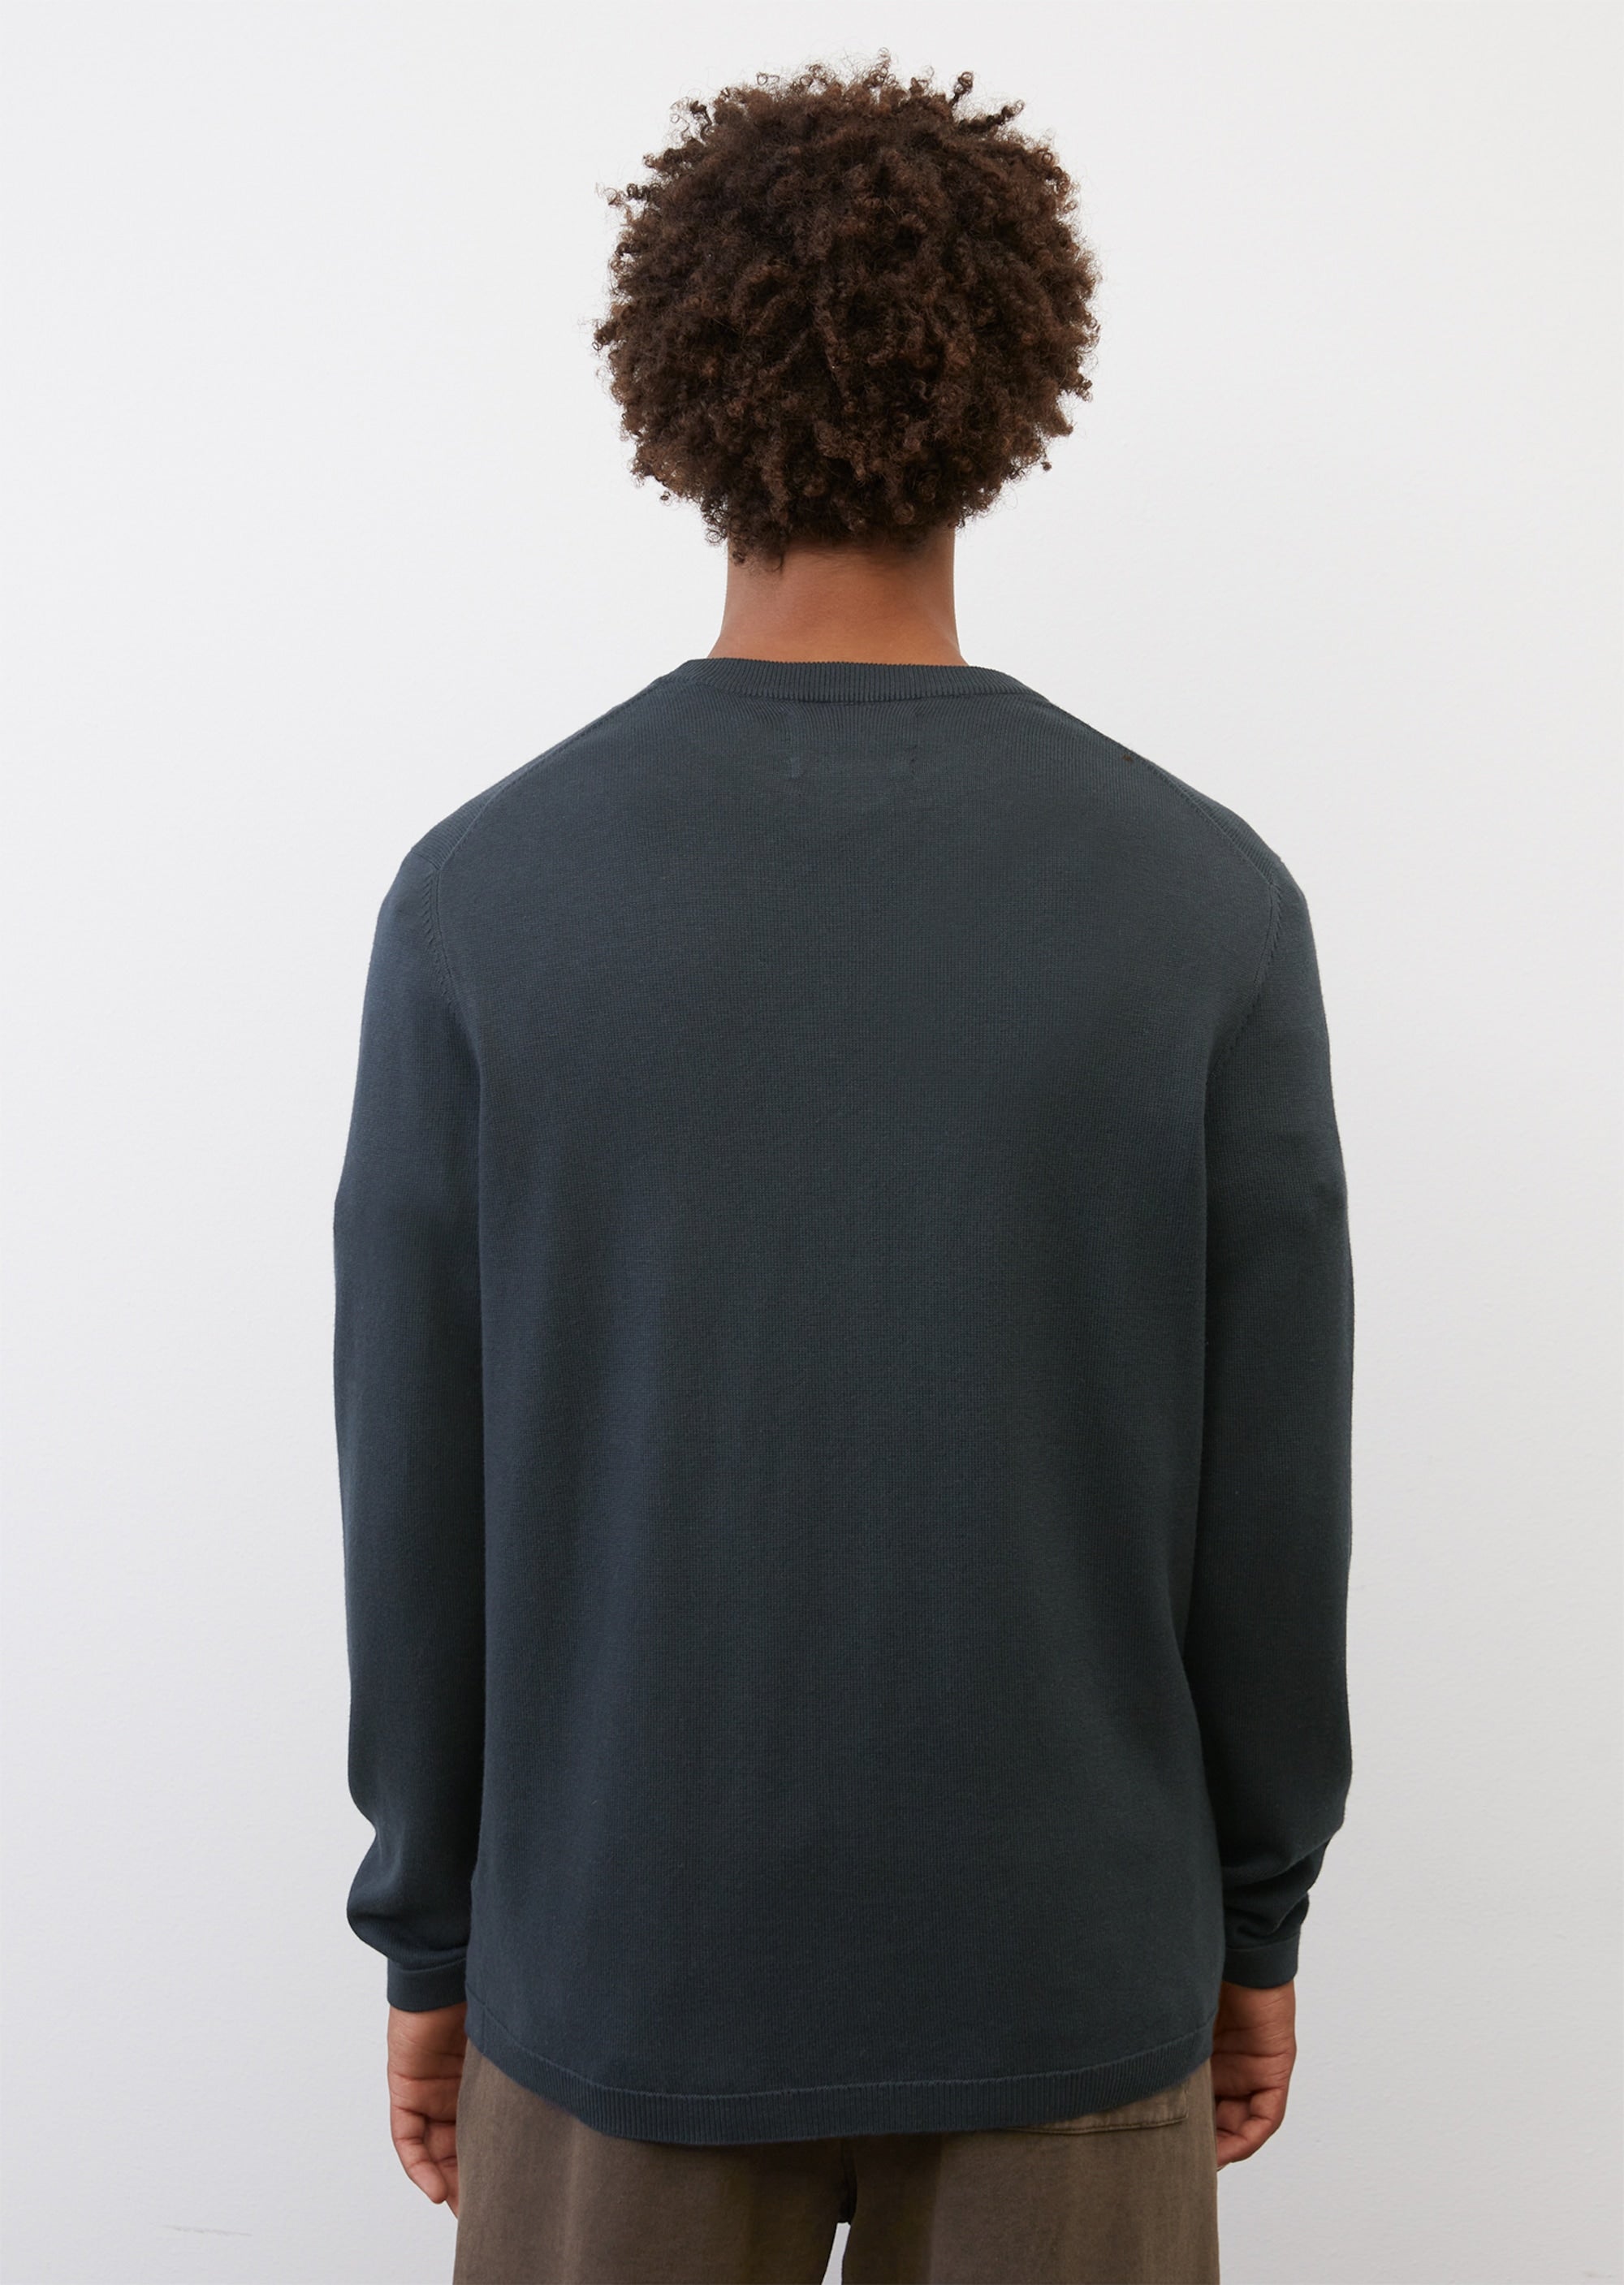 Marc O´Polo - Leichter Langarm-Pullover in weicher Baumwoll-Kaschmir-Qualität